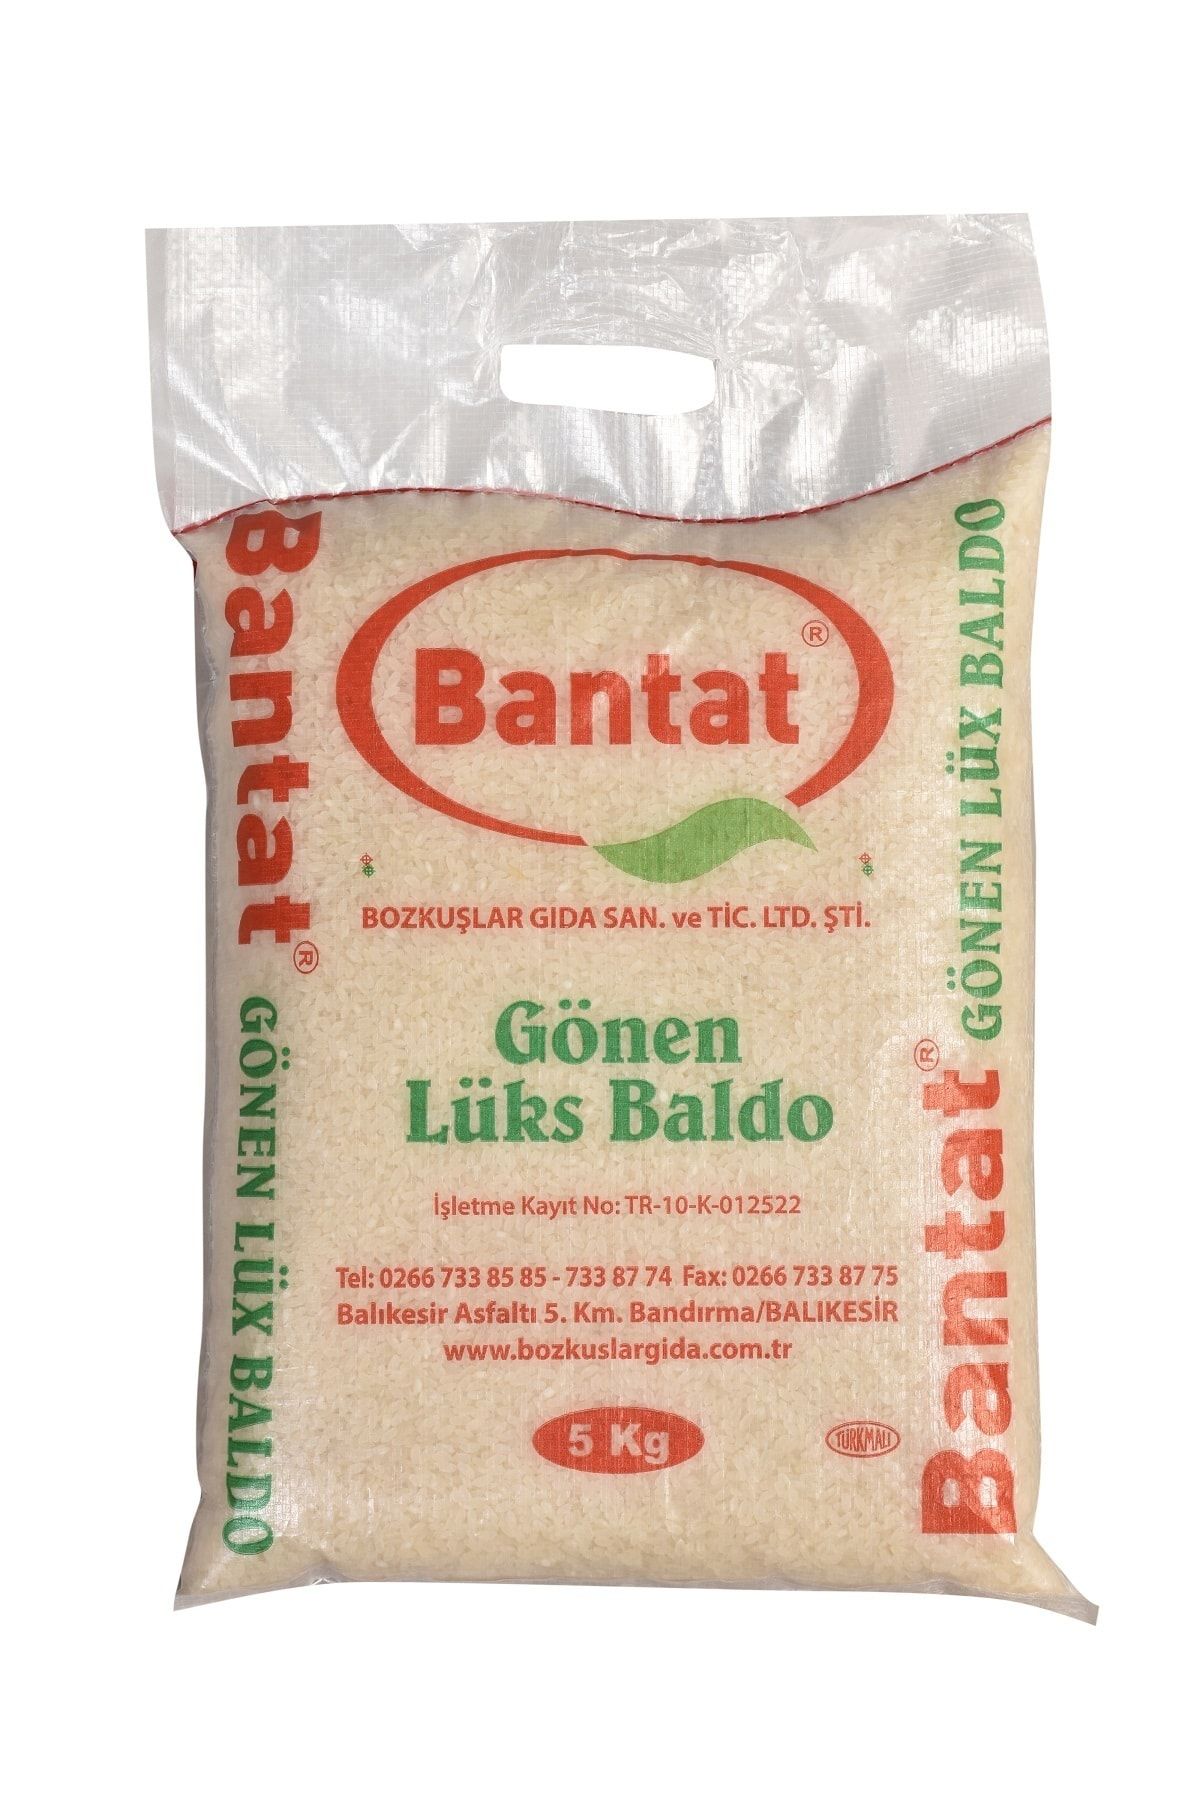 Bantat Gönen Lüks Baldo Pirinç 5kg (ÇUVAL)